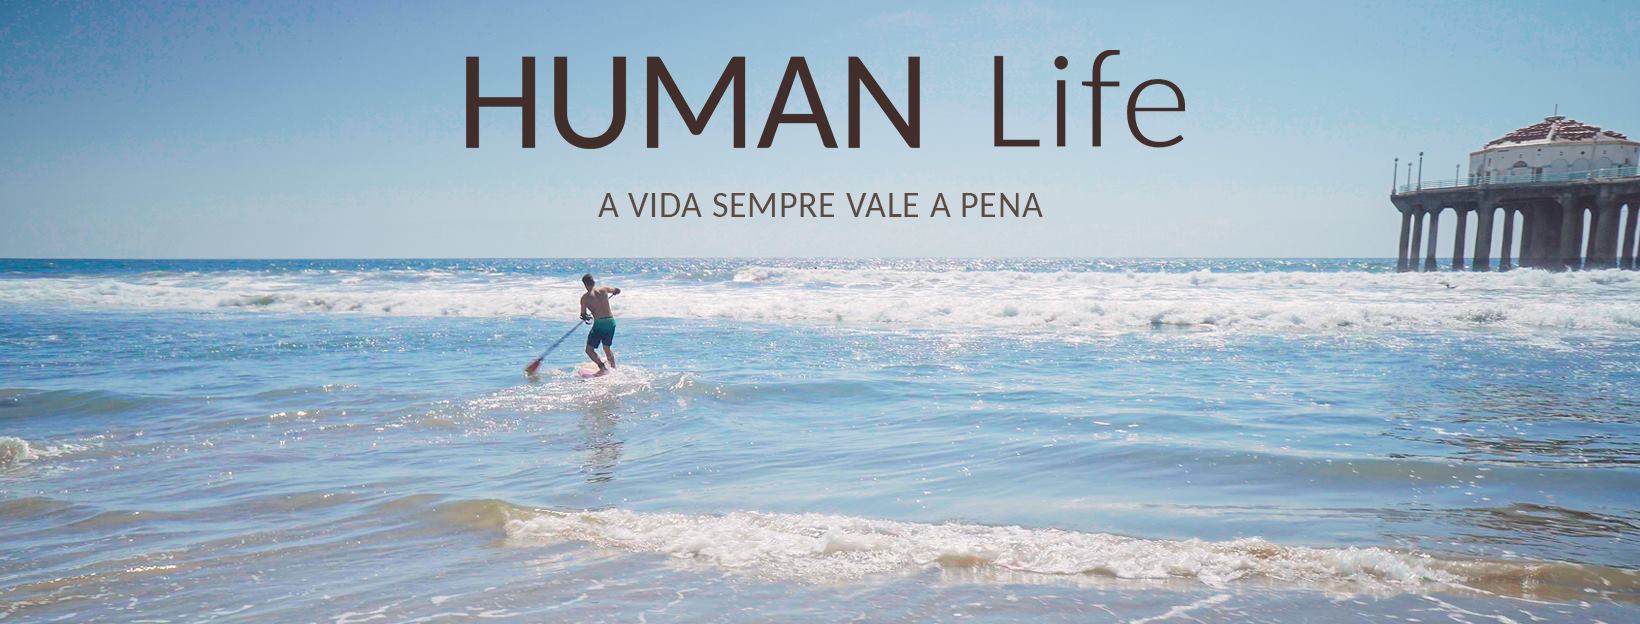 human life documentary pro life